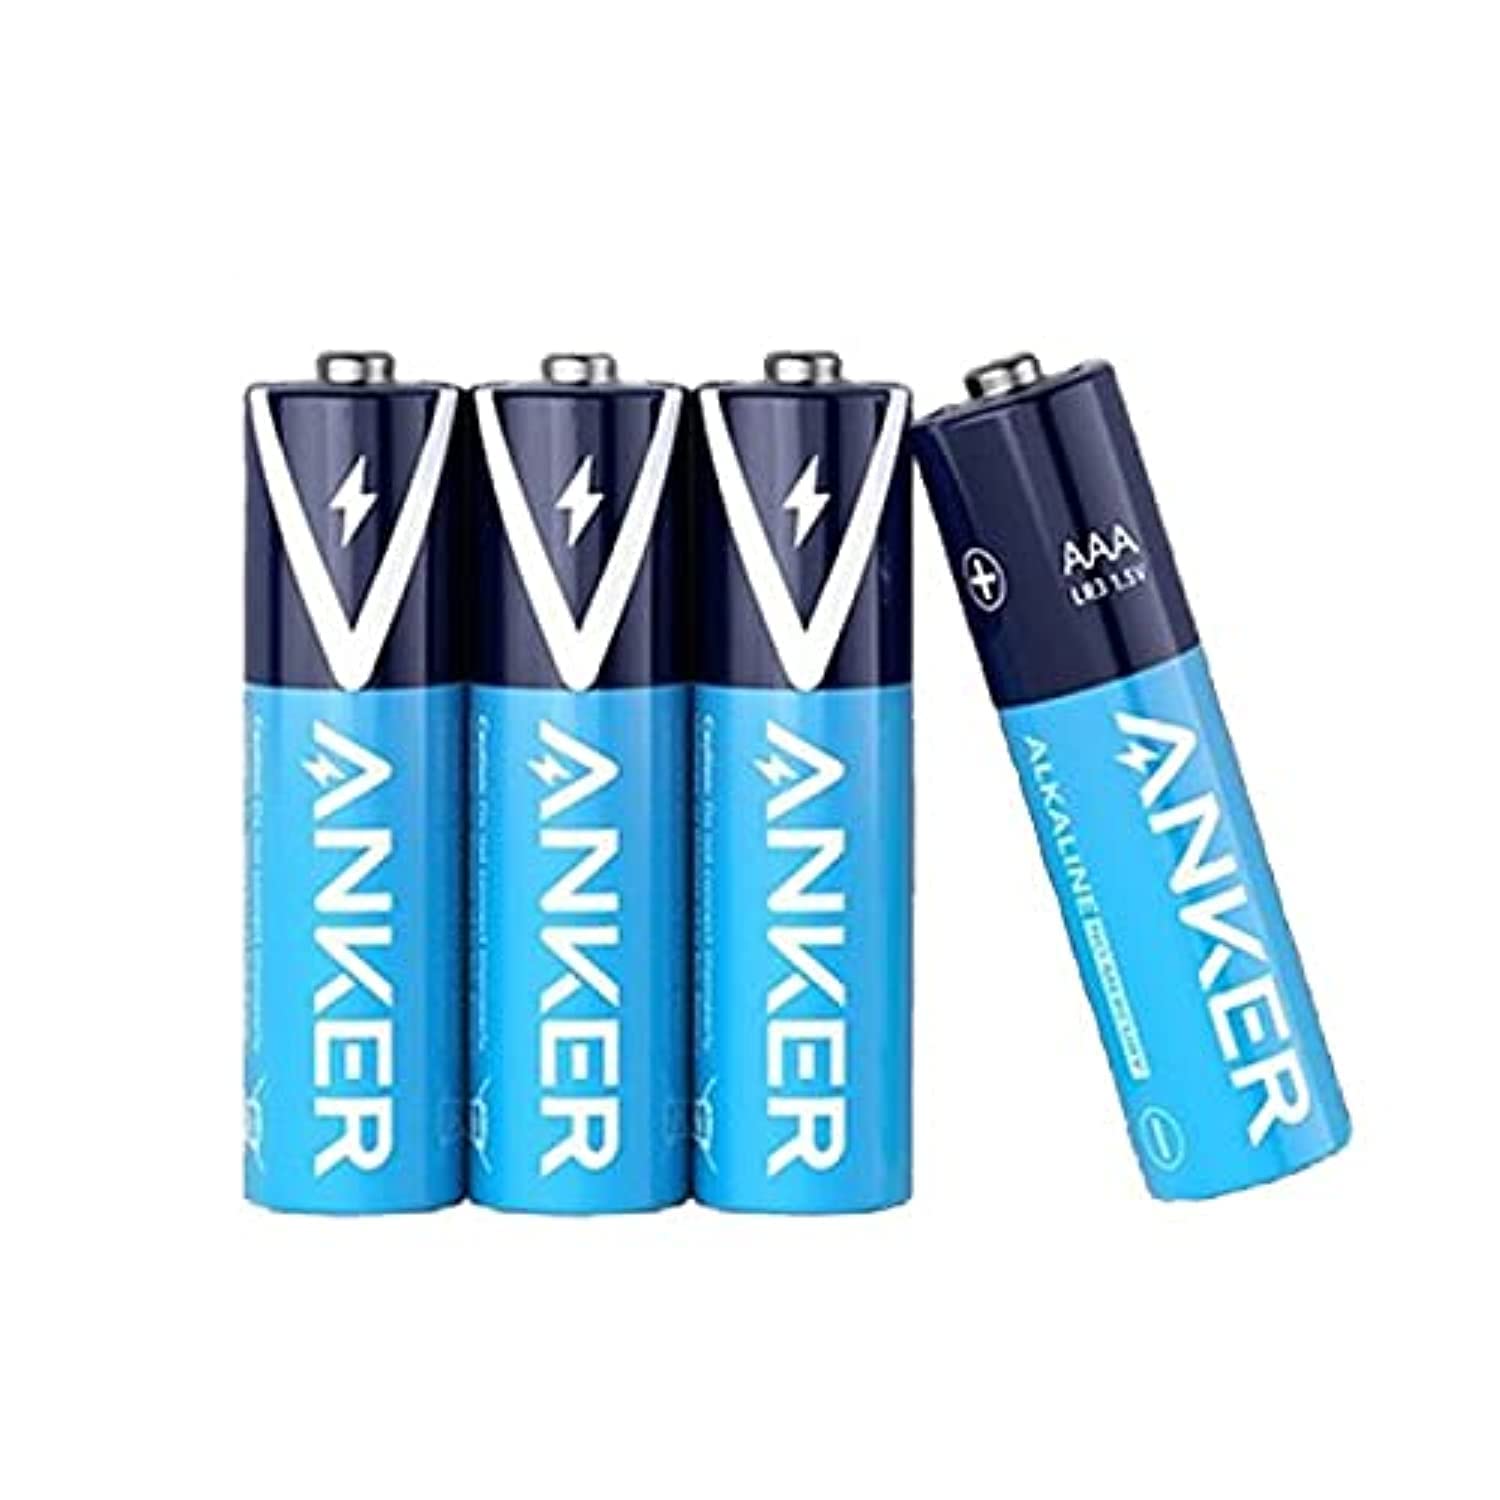 Anker AAA Alkaline Batteries 8-pack